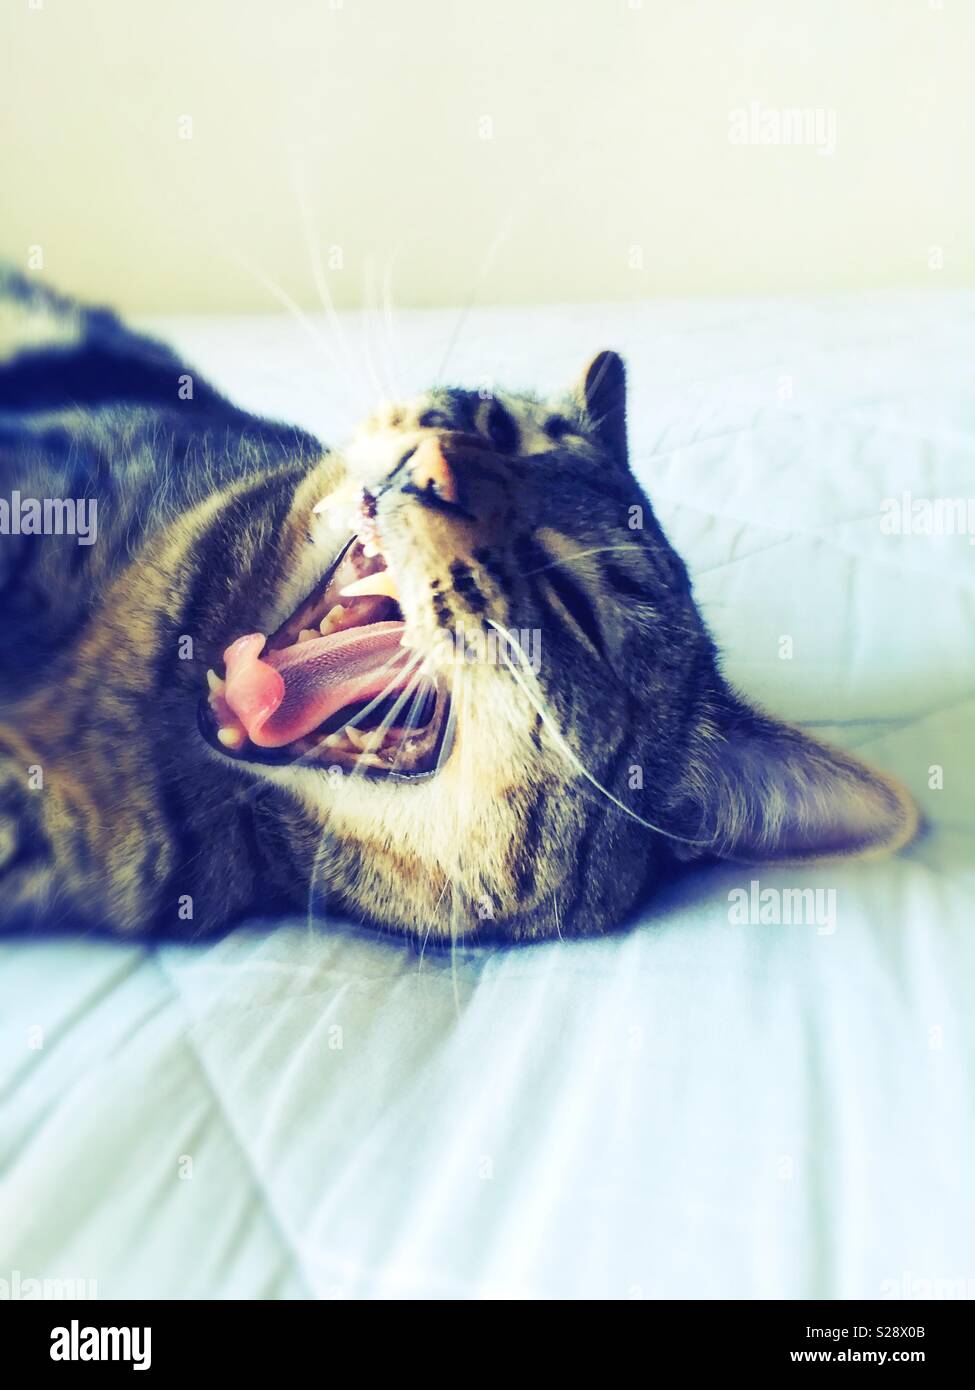 A tabby cat yawning. Stock Photo